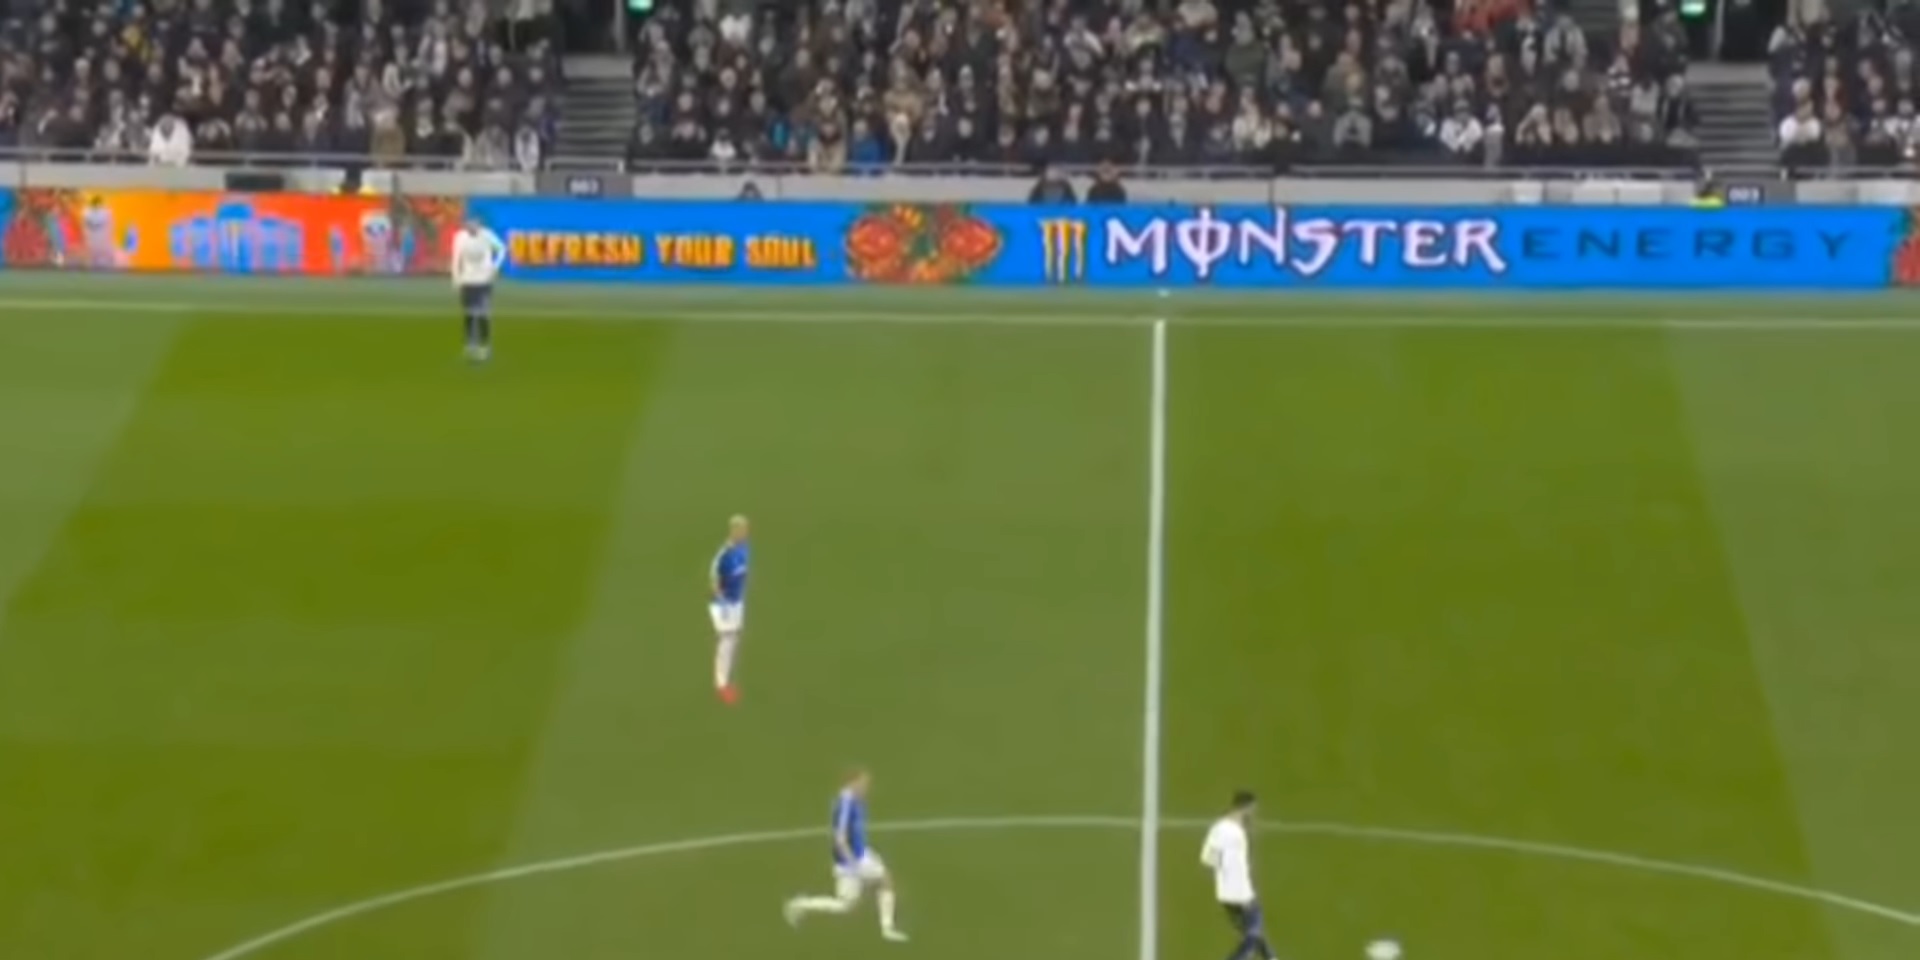 (Video) Tottenham fans mock Lampard with expletive Gerrard chant during Everton thrashing